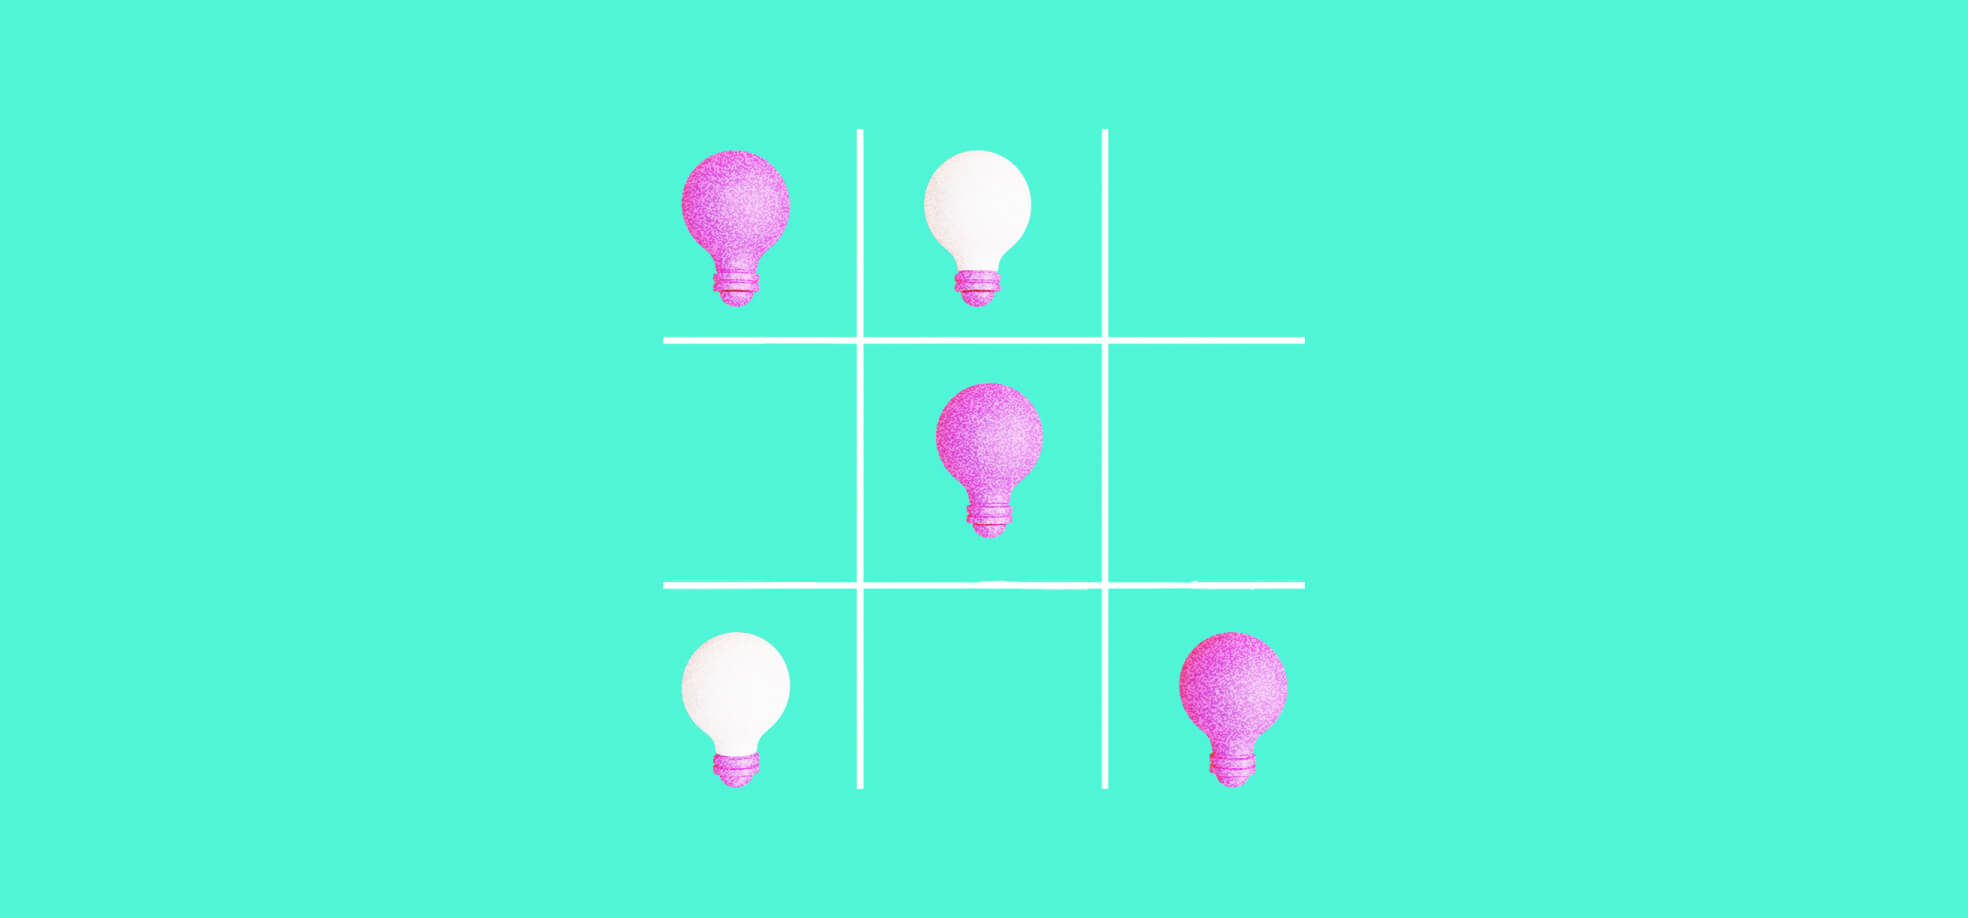 tik tak toe illustration with light bulbs on a green background